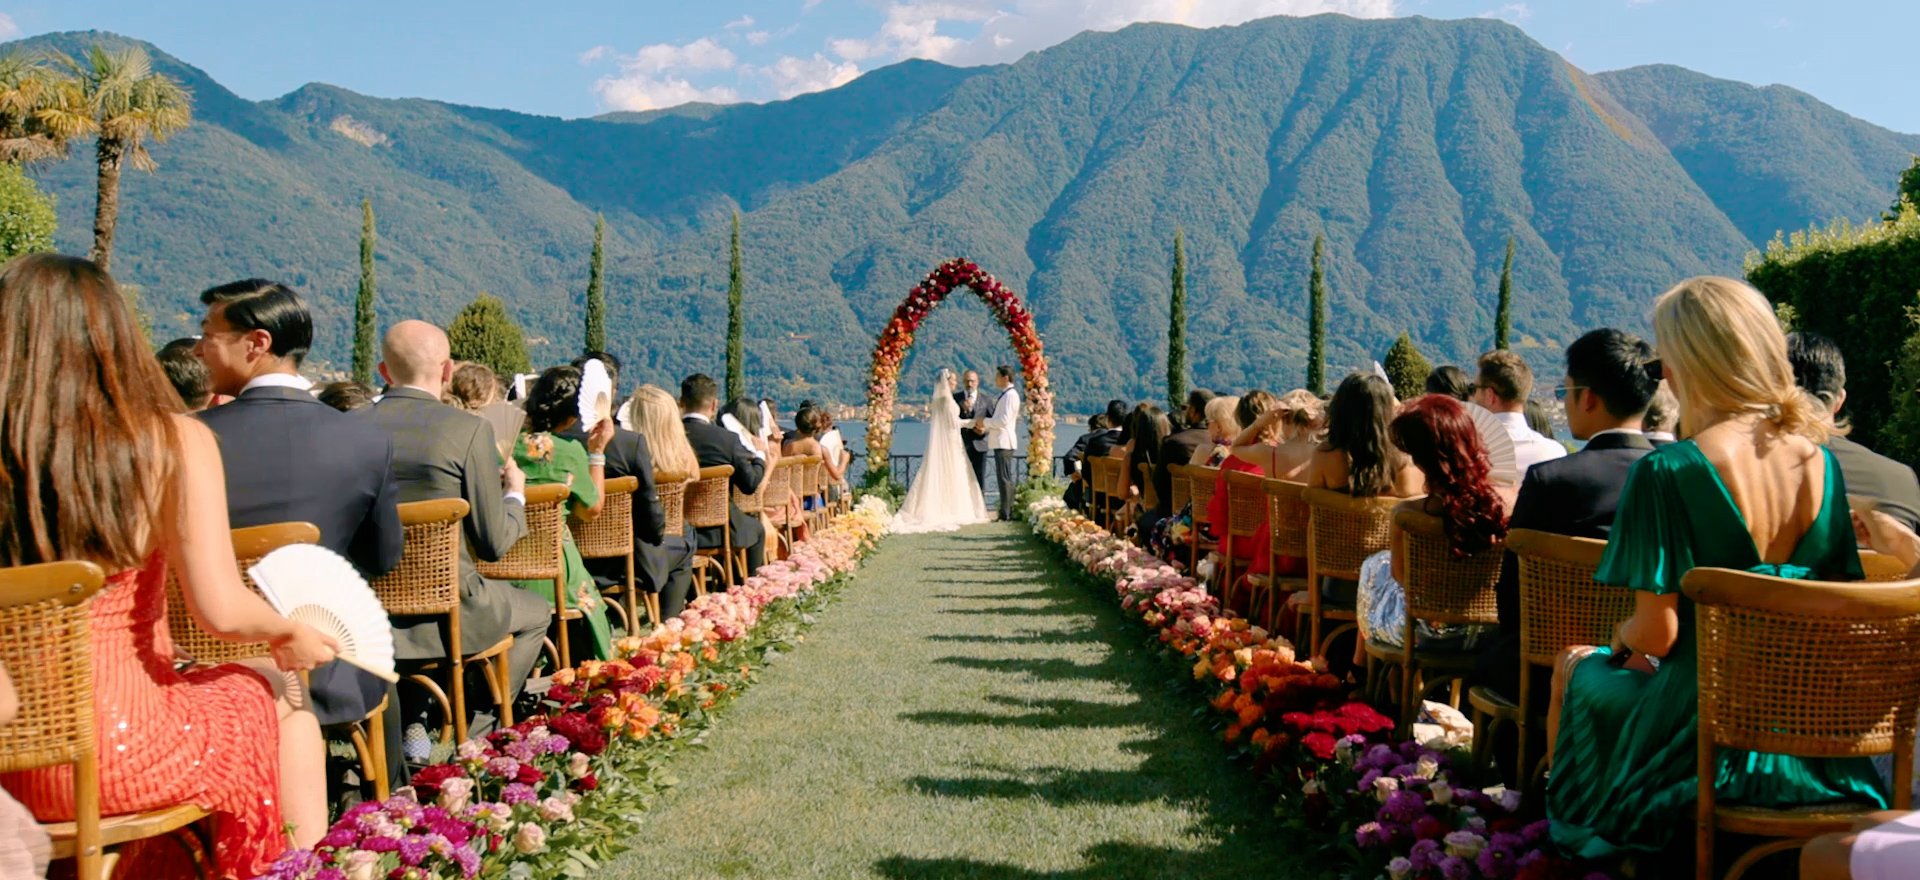 Kristen + Zachary Wedding  Lake Como, Italy on Vimeo